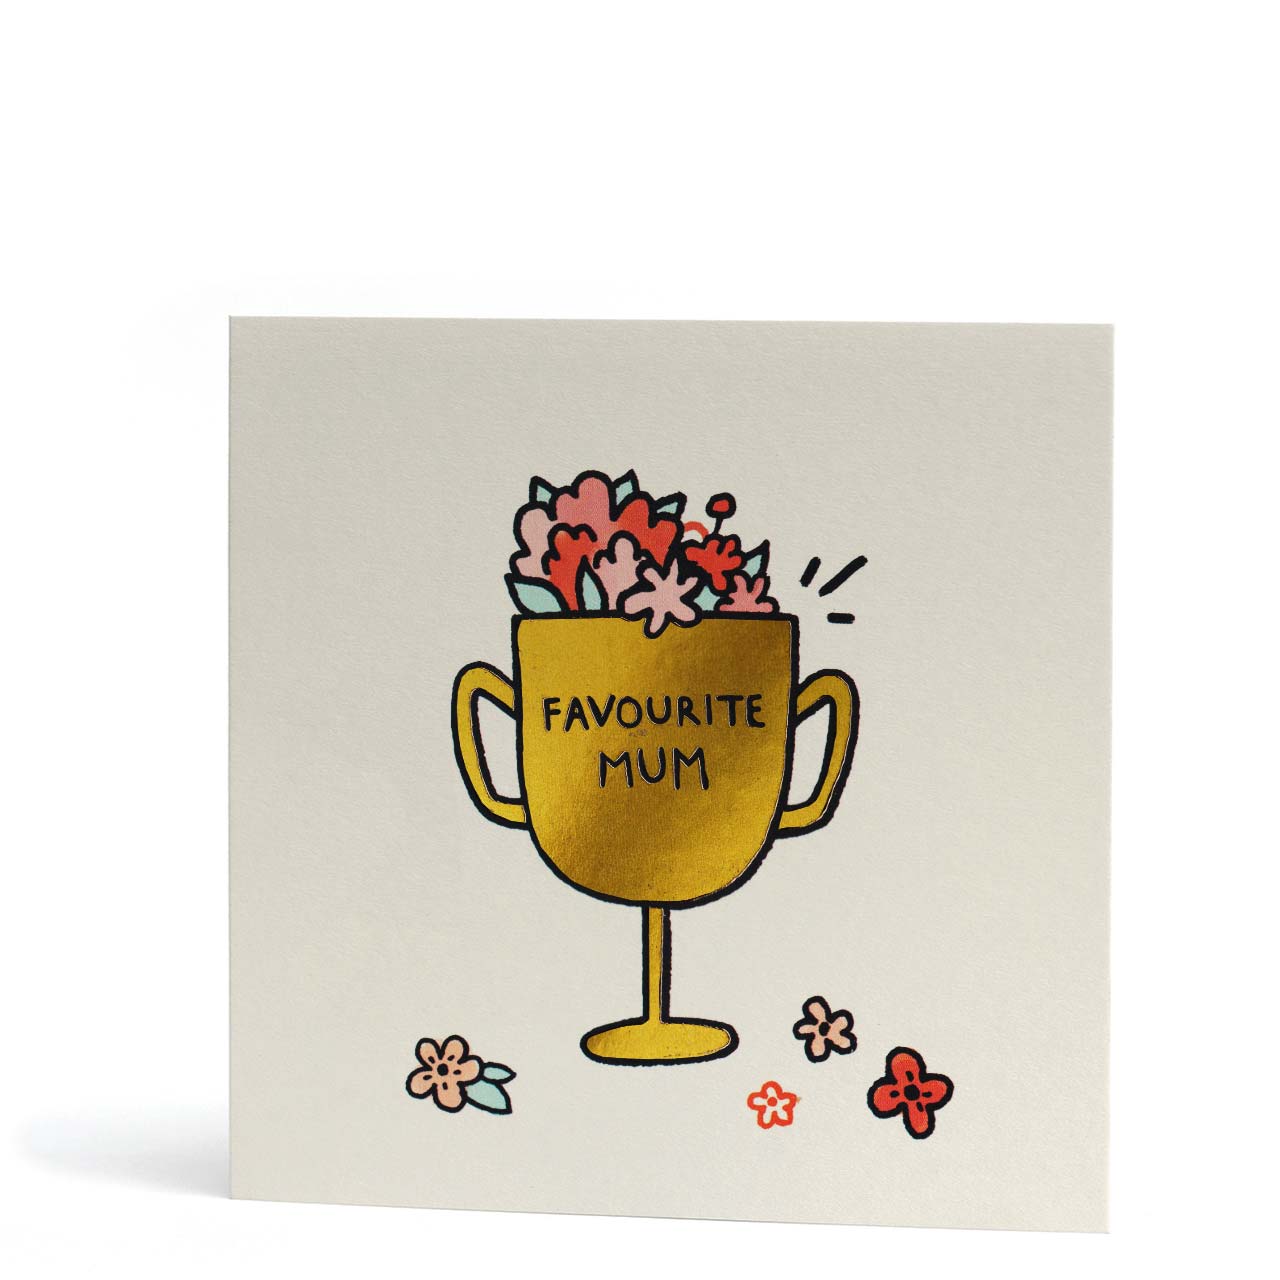 Favourite Mum Gold Foil Greeting Card